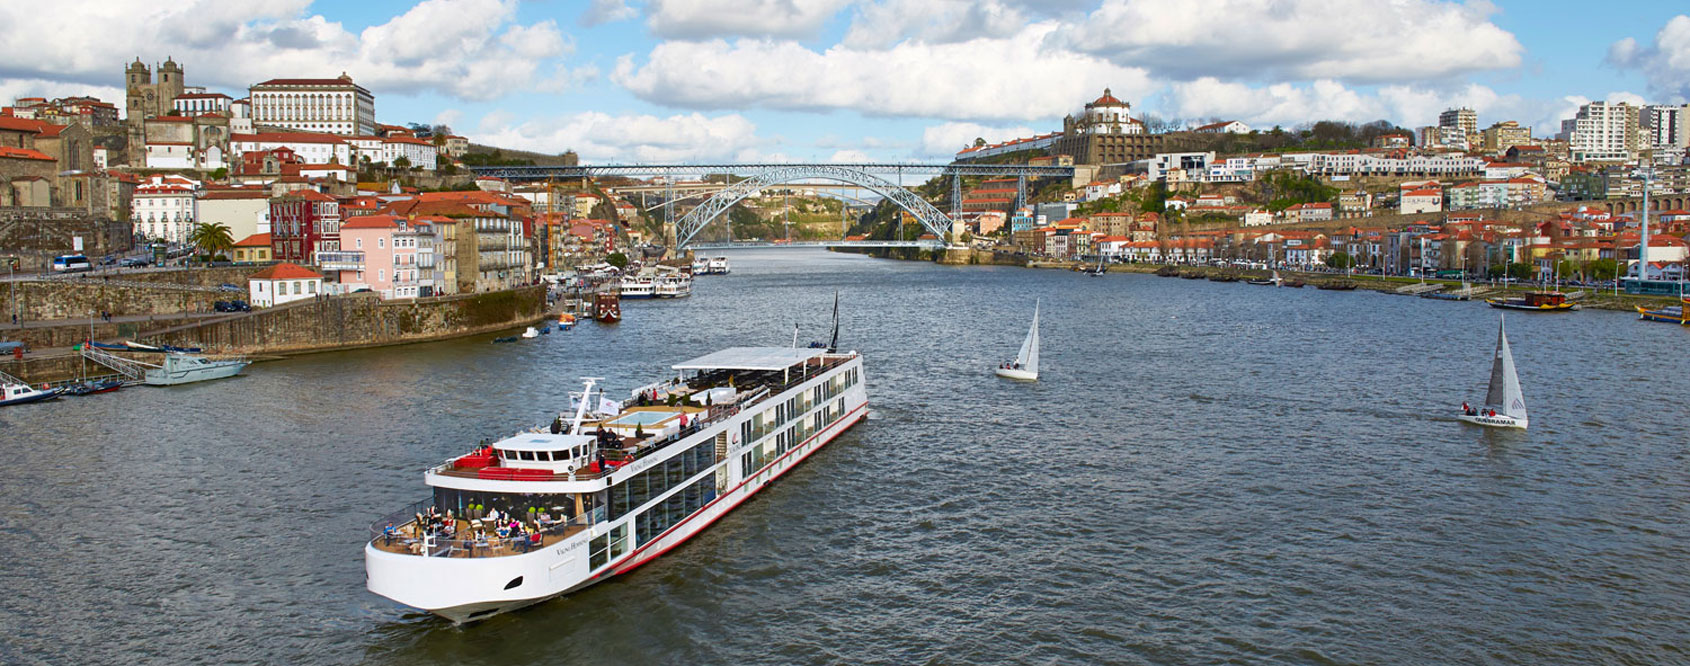 Viking River Cruises Main Image